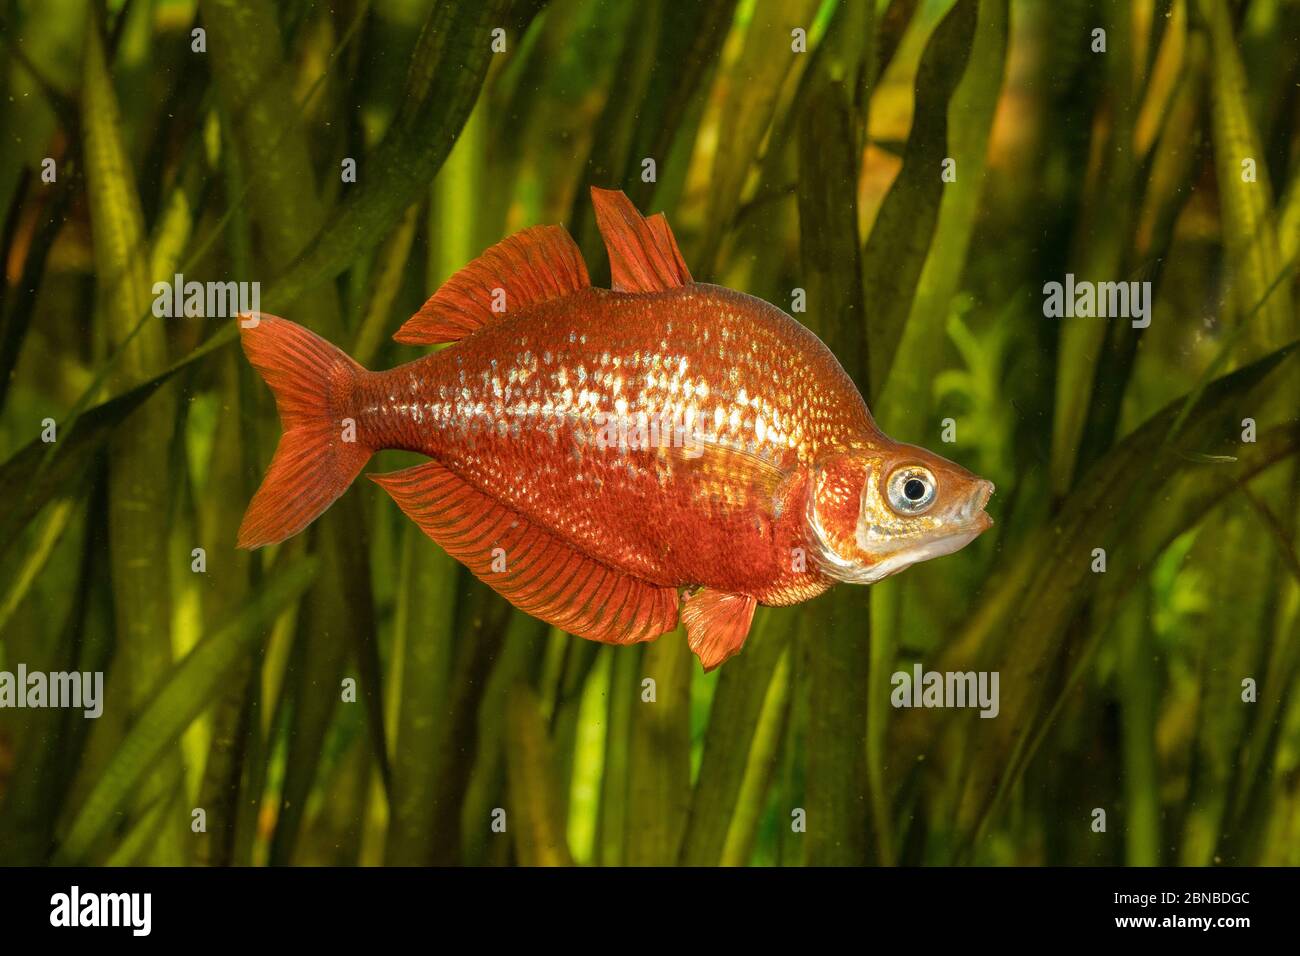 Roter Regenbogenfisch, Lachsroter Regenbogenfisch, Neuguinea roter Irianischer Regenbogenfisch (Glossolepis incisus), beeindruckendes Verhalten, nupitielle Färbung Stockfoto